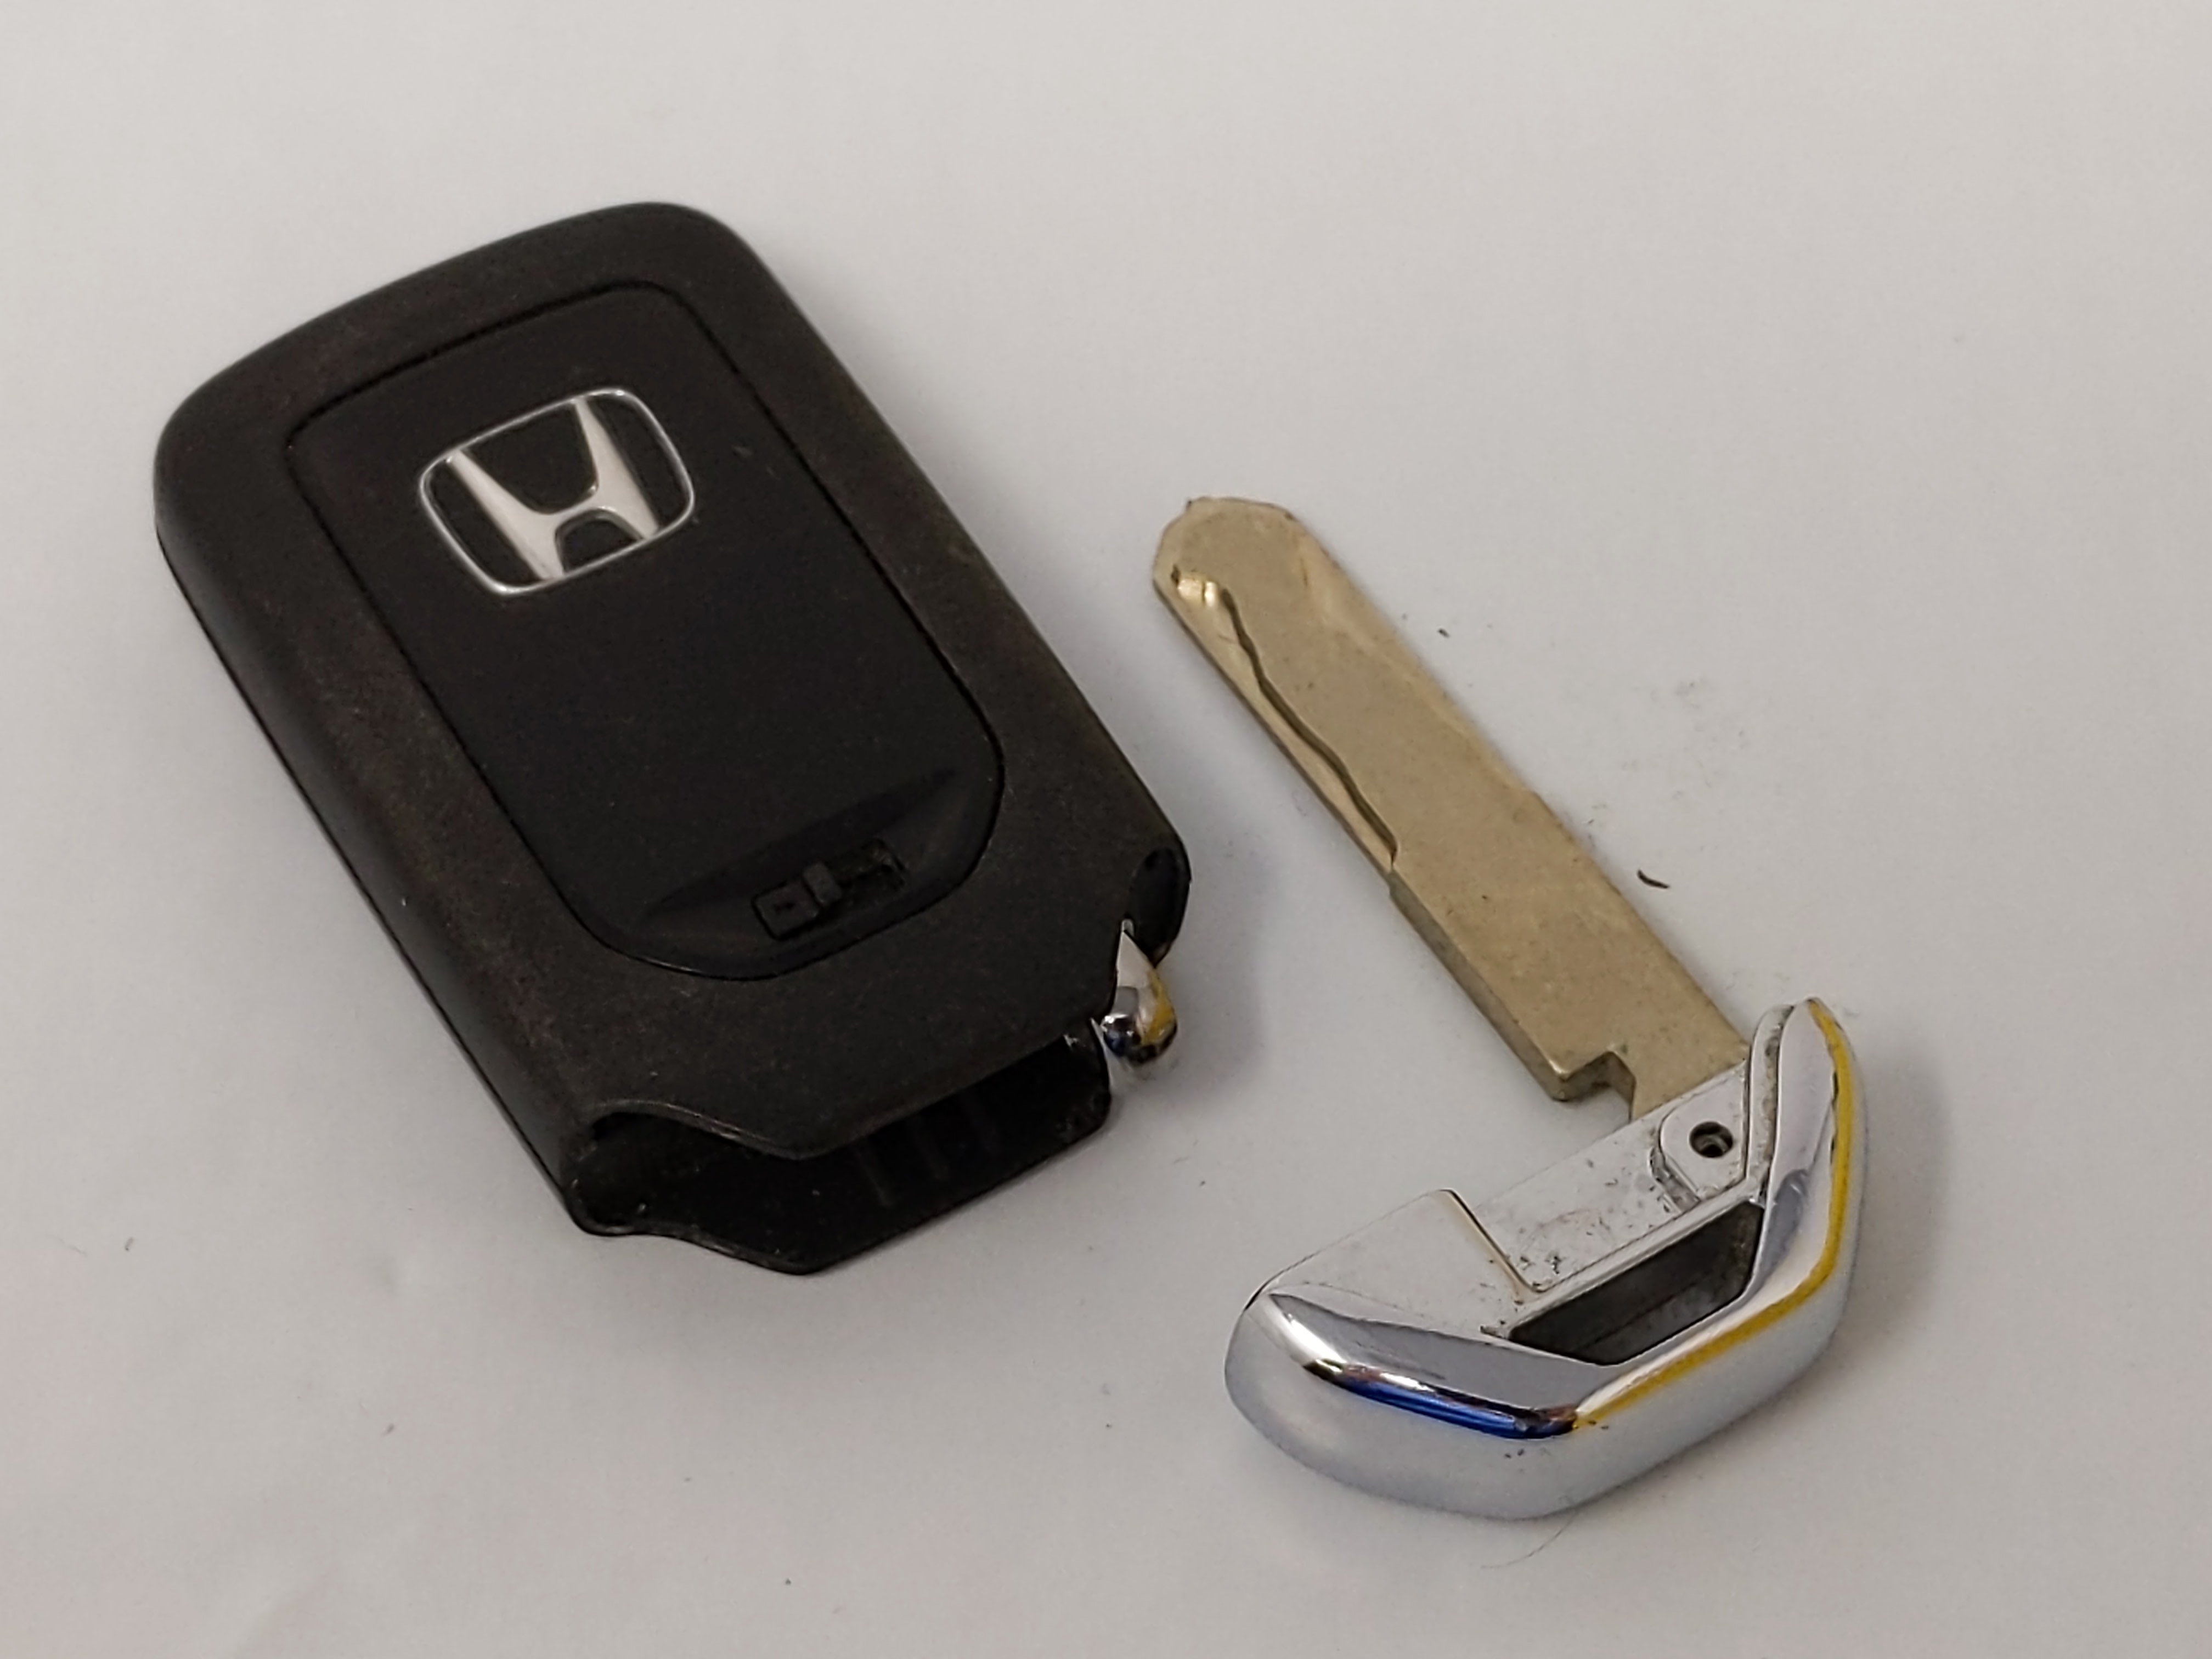 Honda Accord Keyless Entry Remote Fob ACJ932HK1210A 4 buttons - Oemusedautoparts1.com